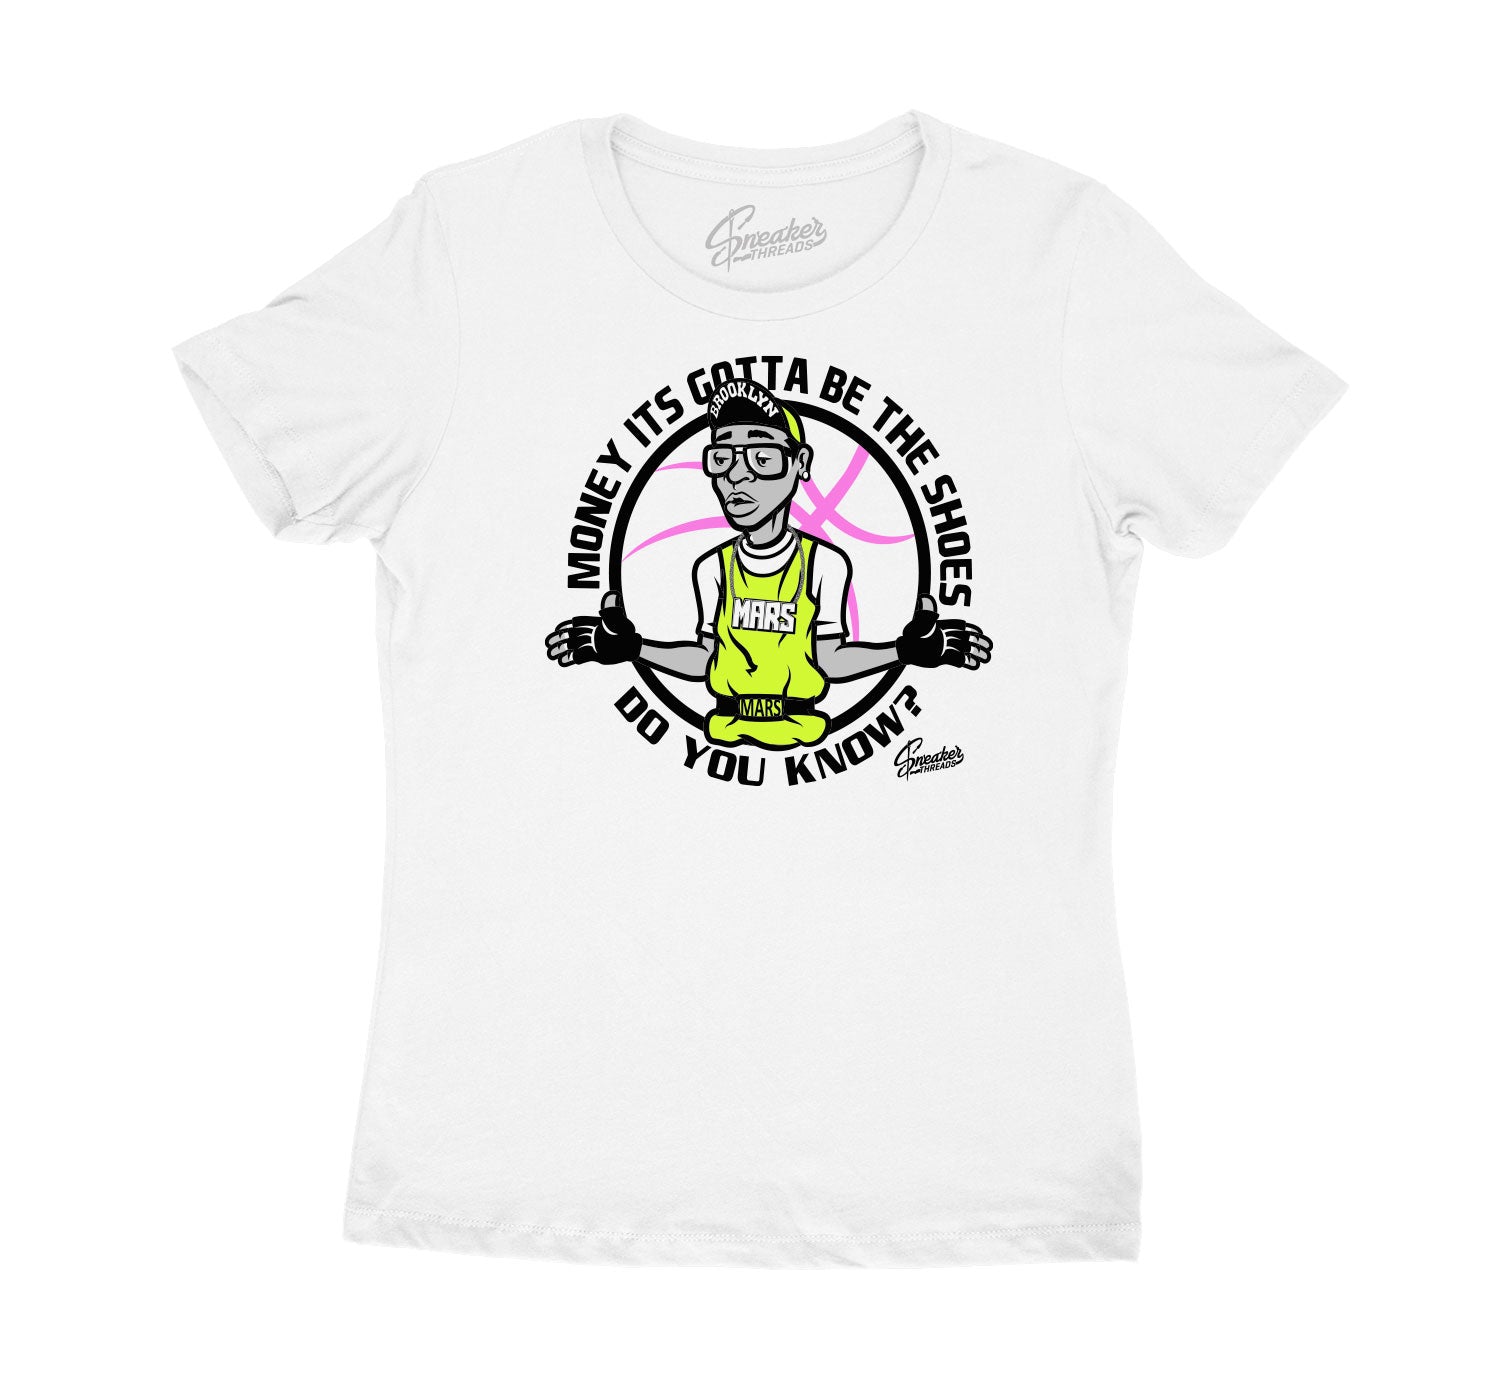 Womens Lemon Venom Shirt - Gotta Be Shoes - Neon Pink